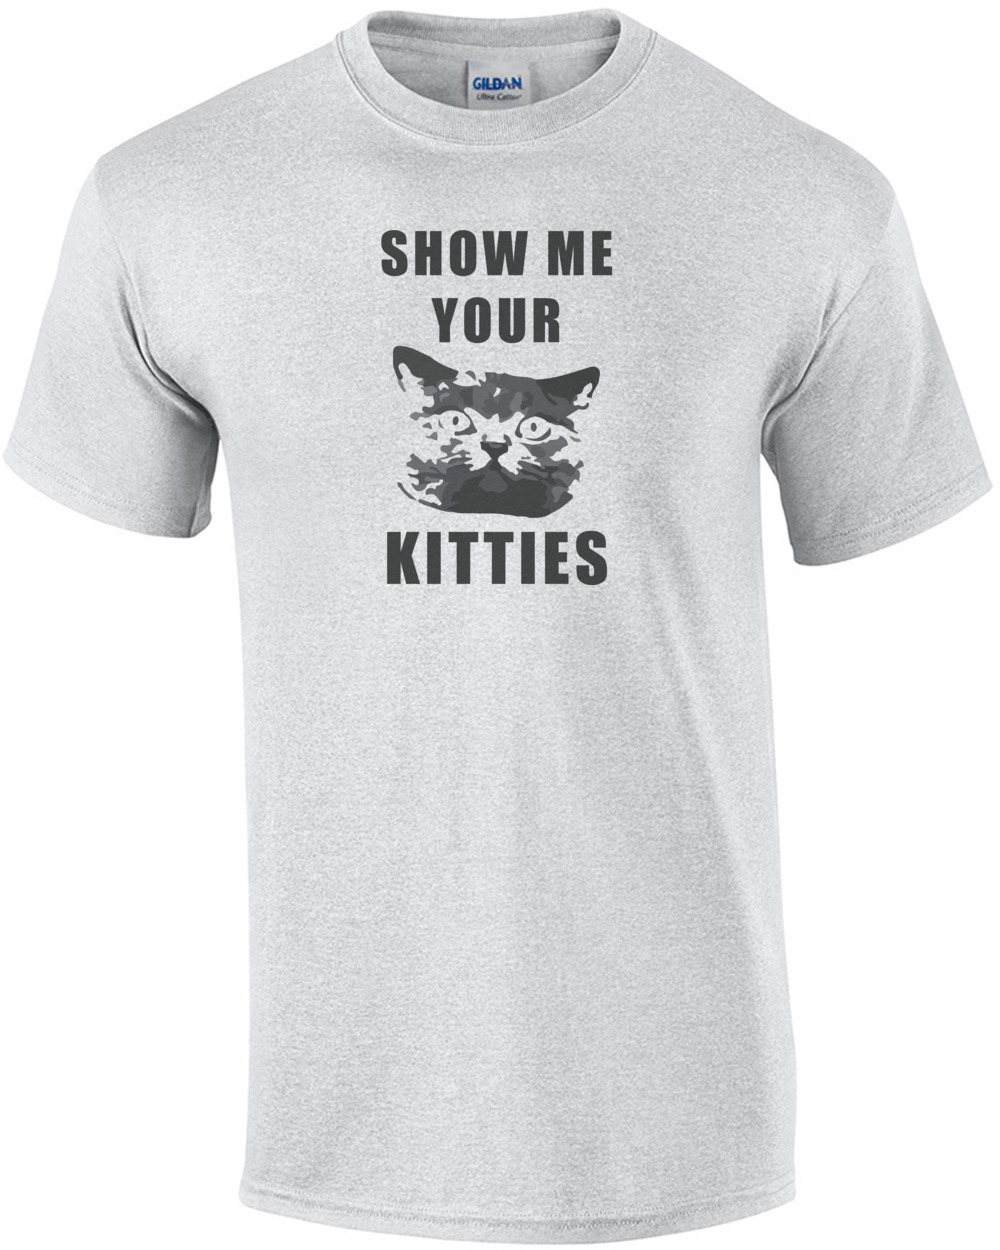 Show Me Your Kitties Please I Love Cats Shirt Shirt